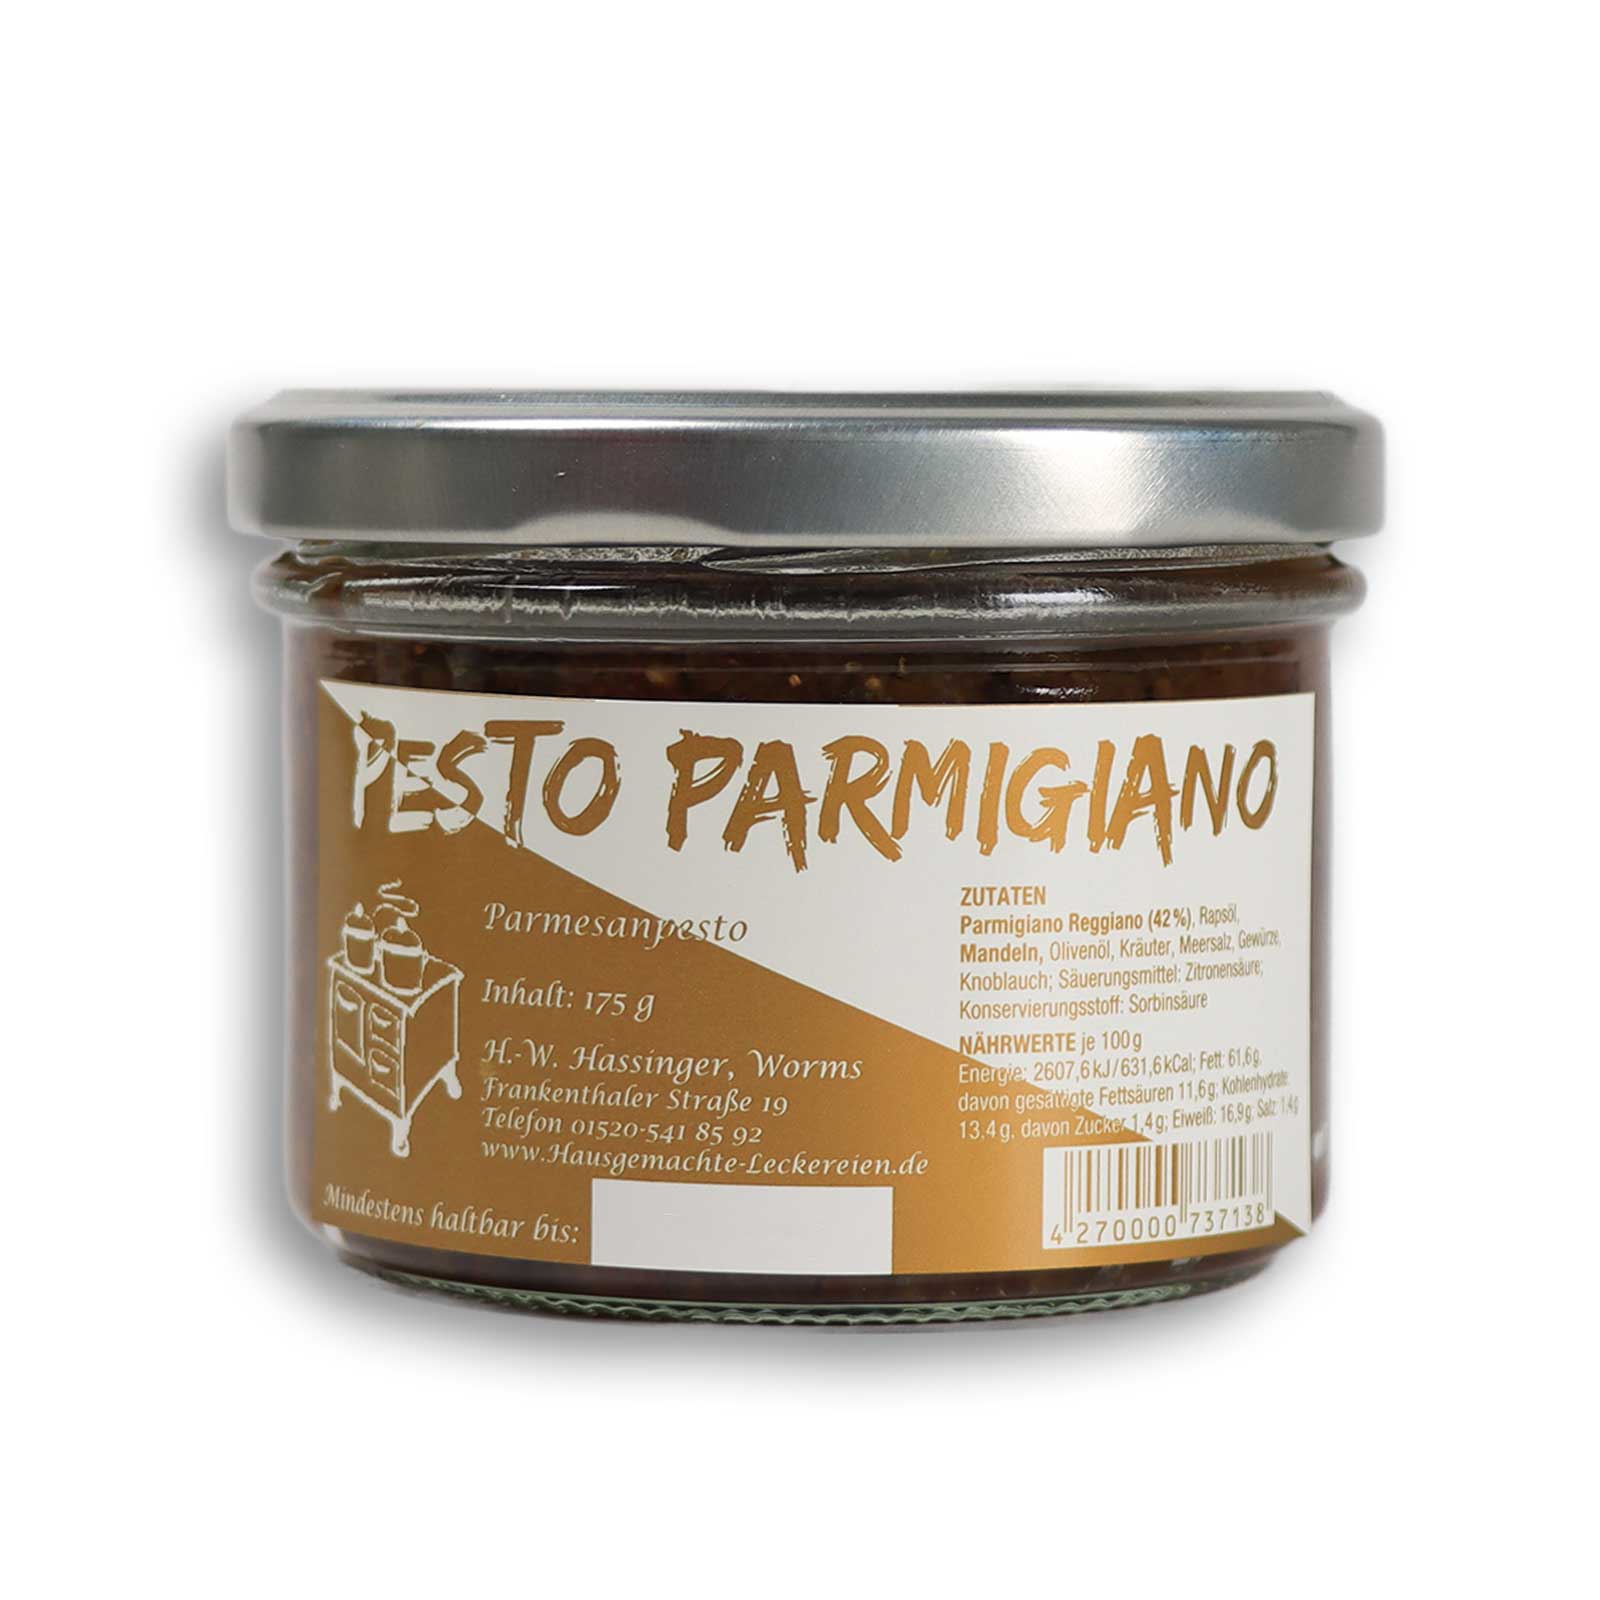 Pesto Parmigiano, wie aus Italien